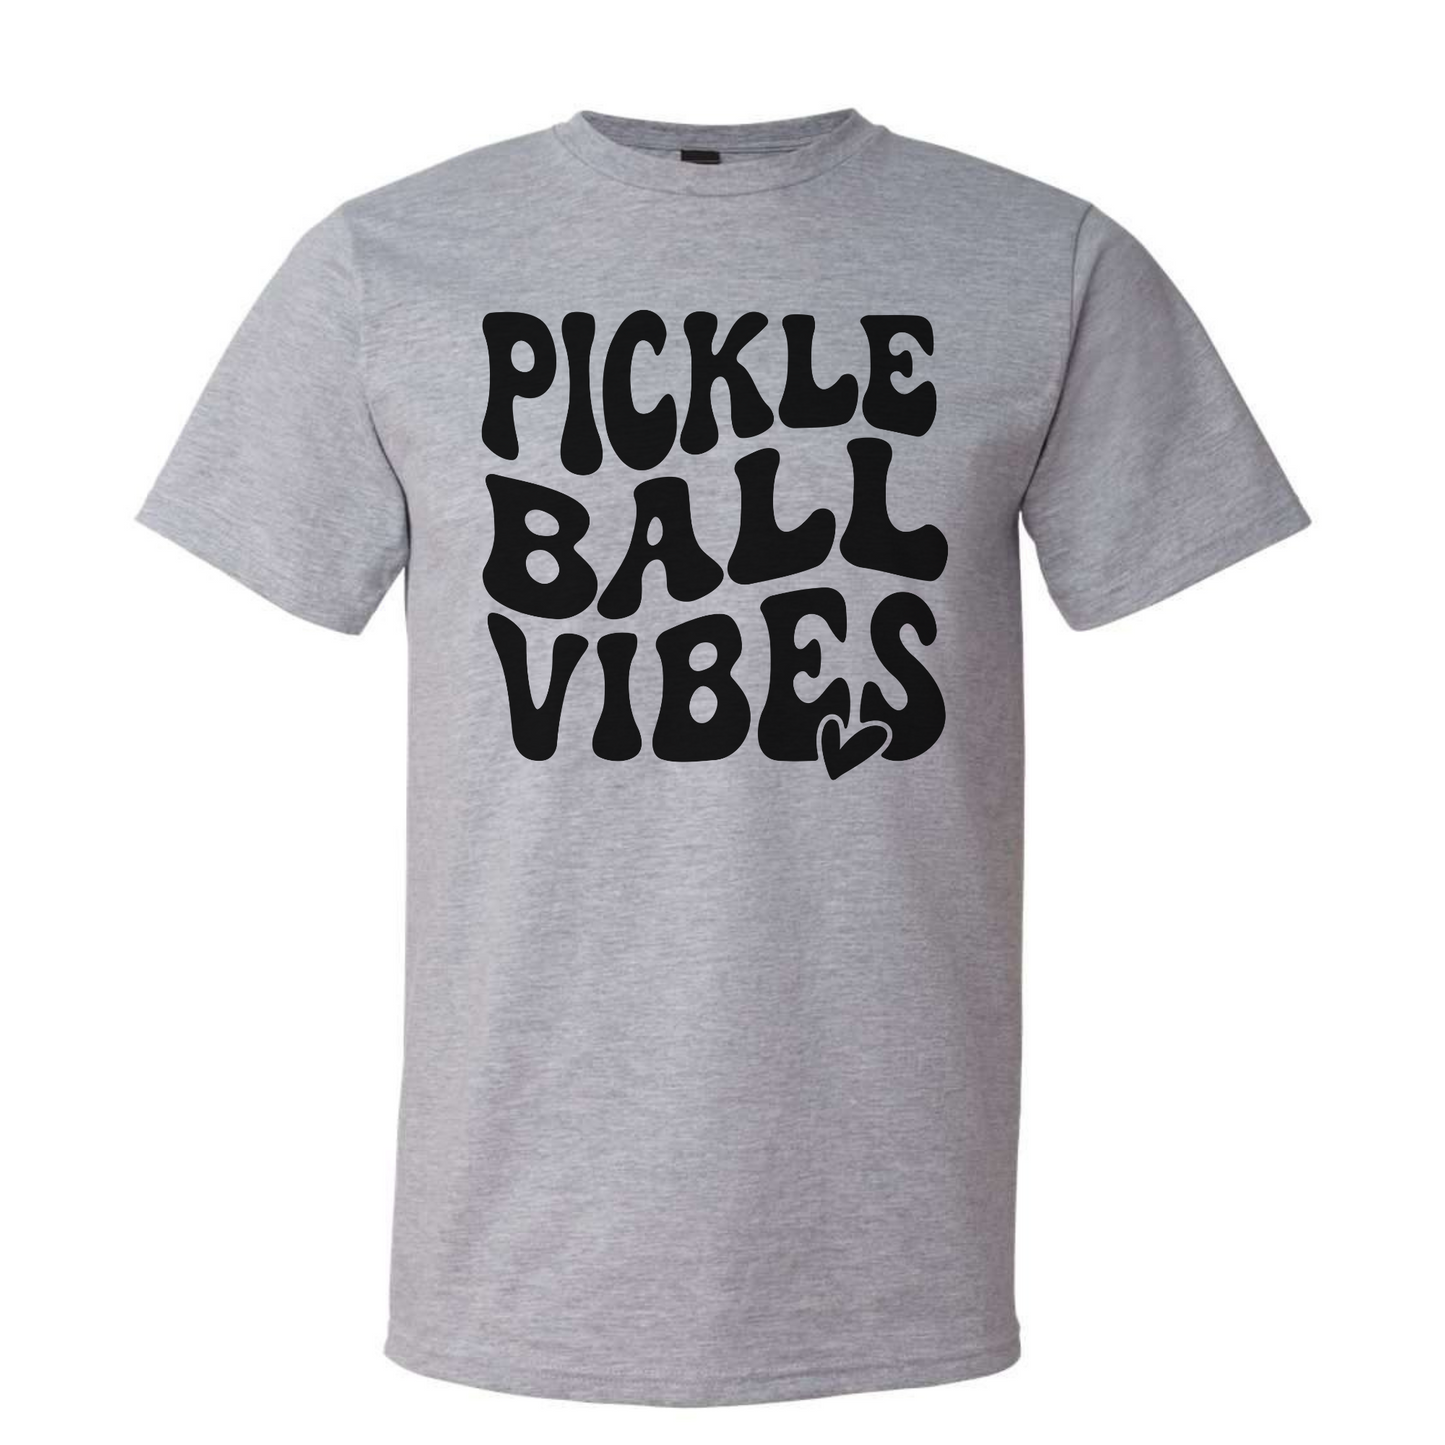 SALE: Pickleball Vibes T-Shirt